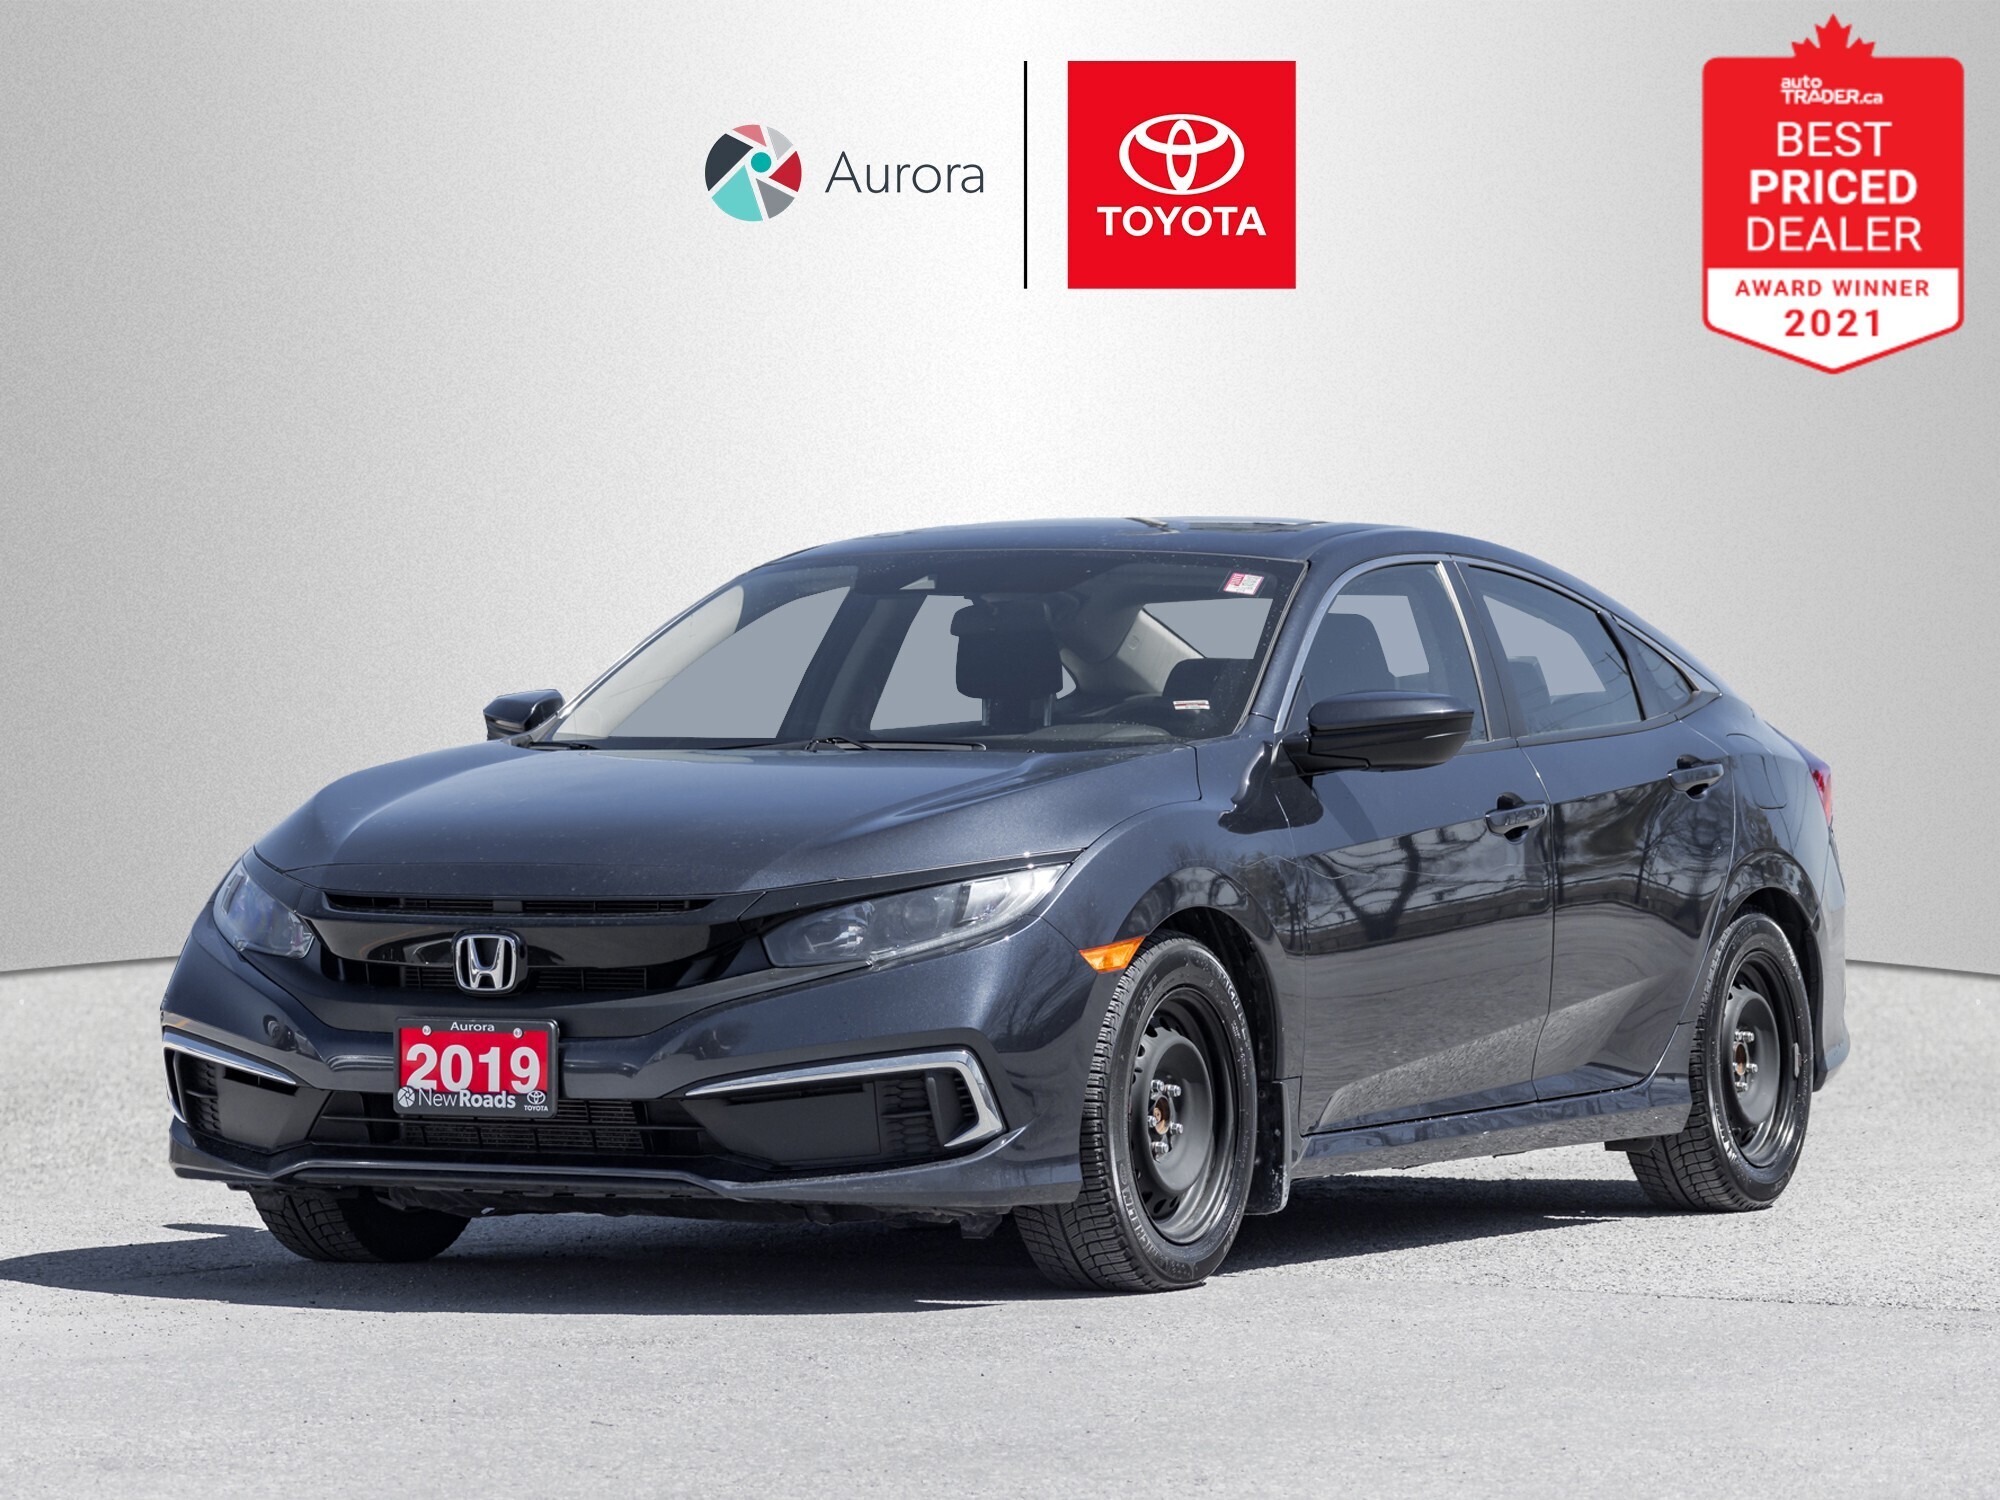 2019 Honda Civic EX, Locally Owned, Clean Car Fax